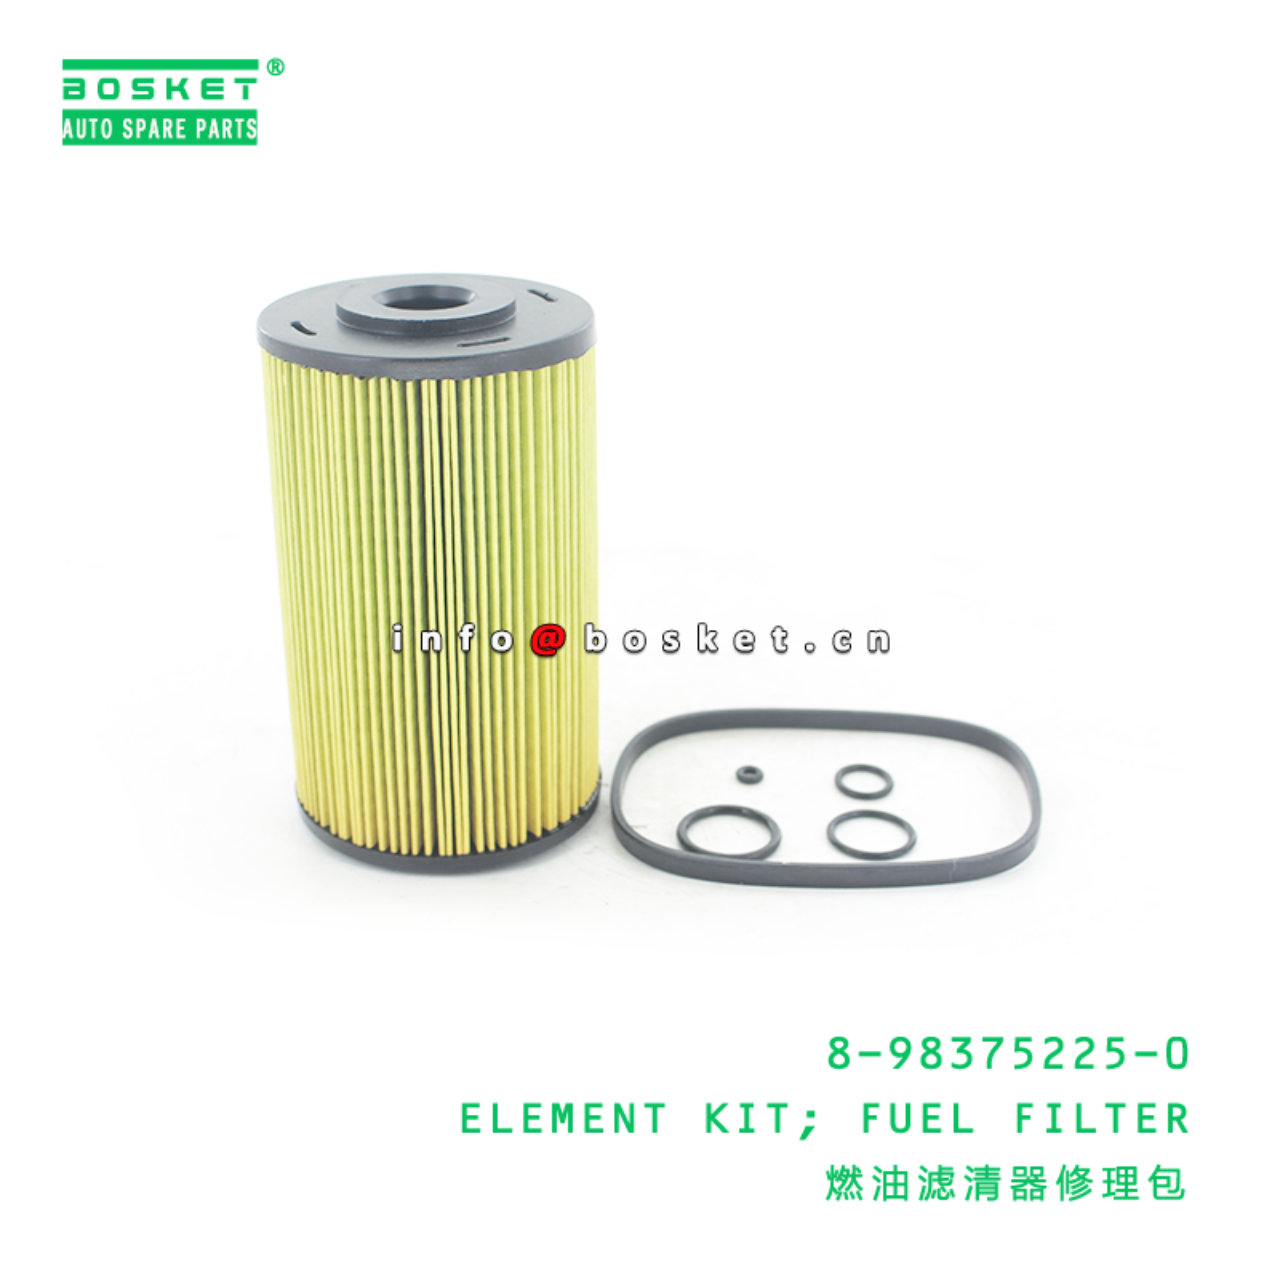 8-98375225-0 Fuel Filter Element Kit Suitable for ISUZU FTR 8983752250